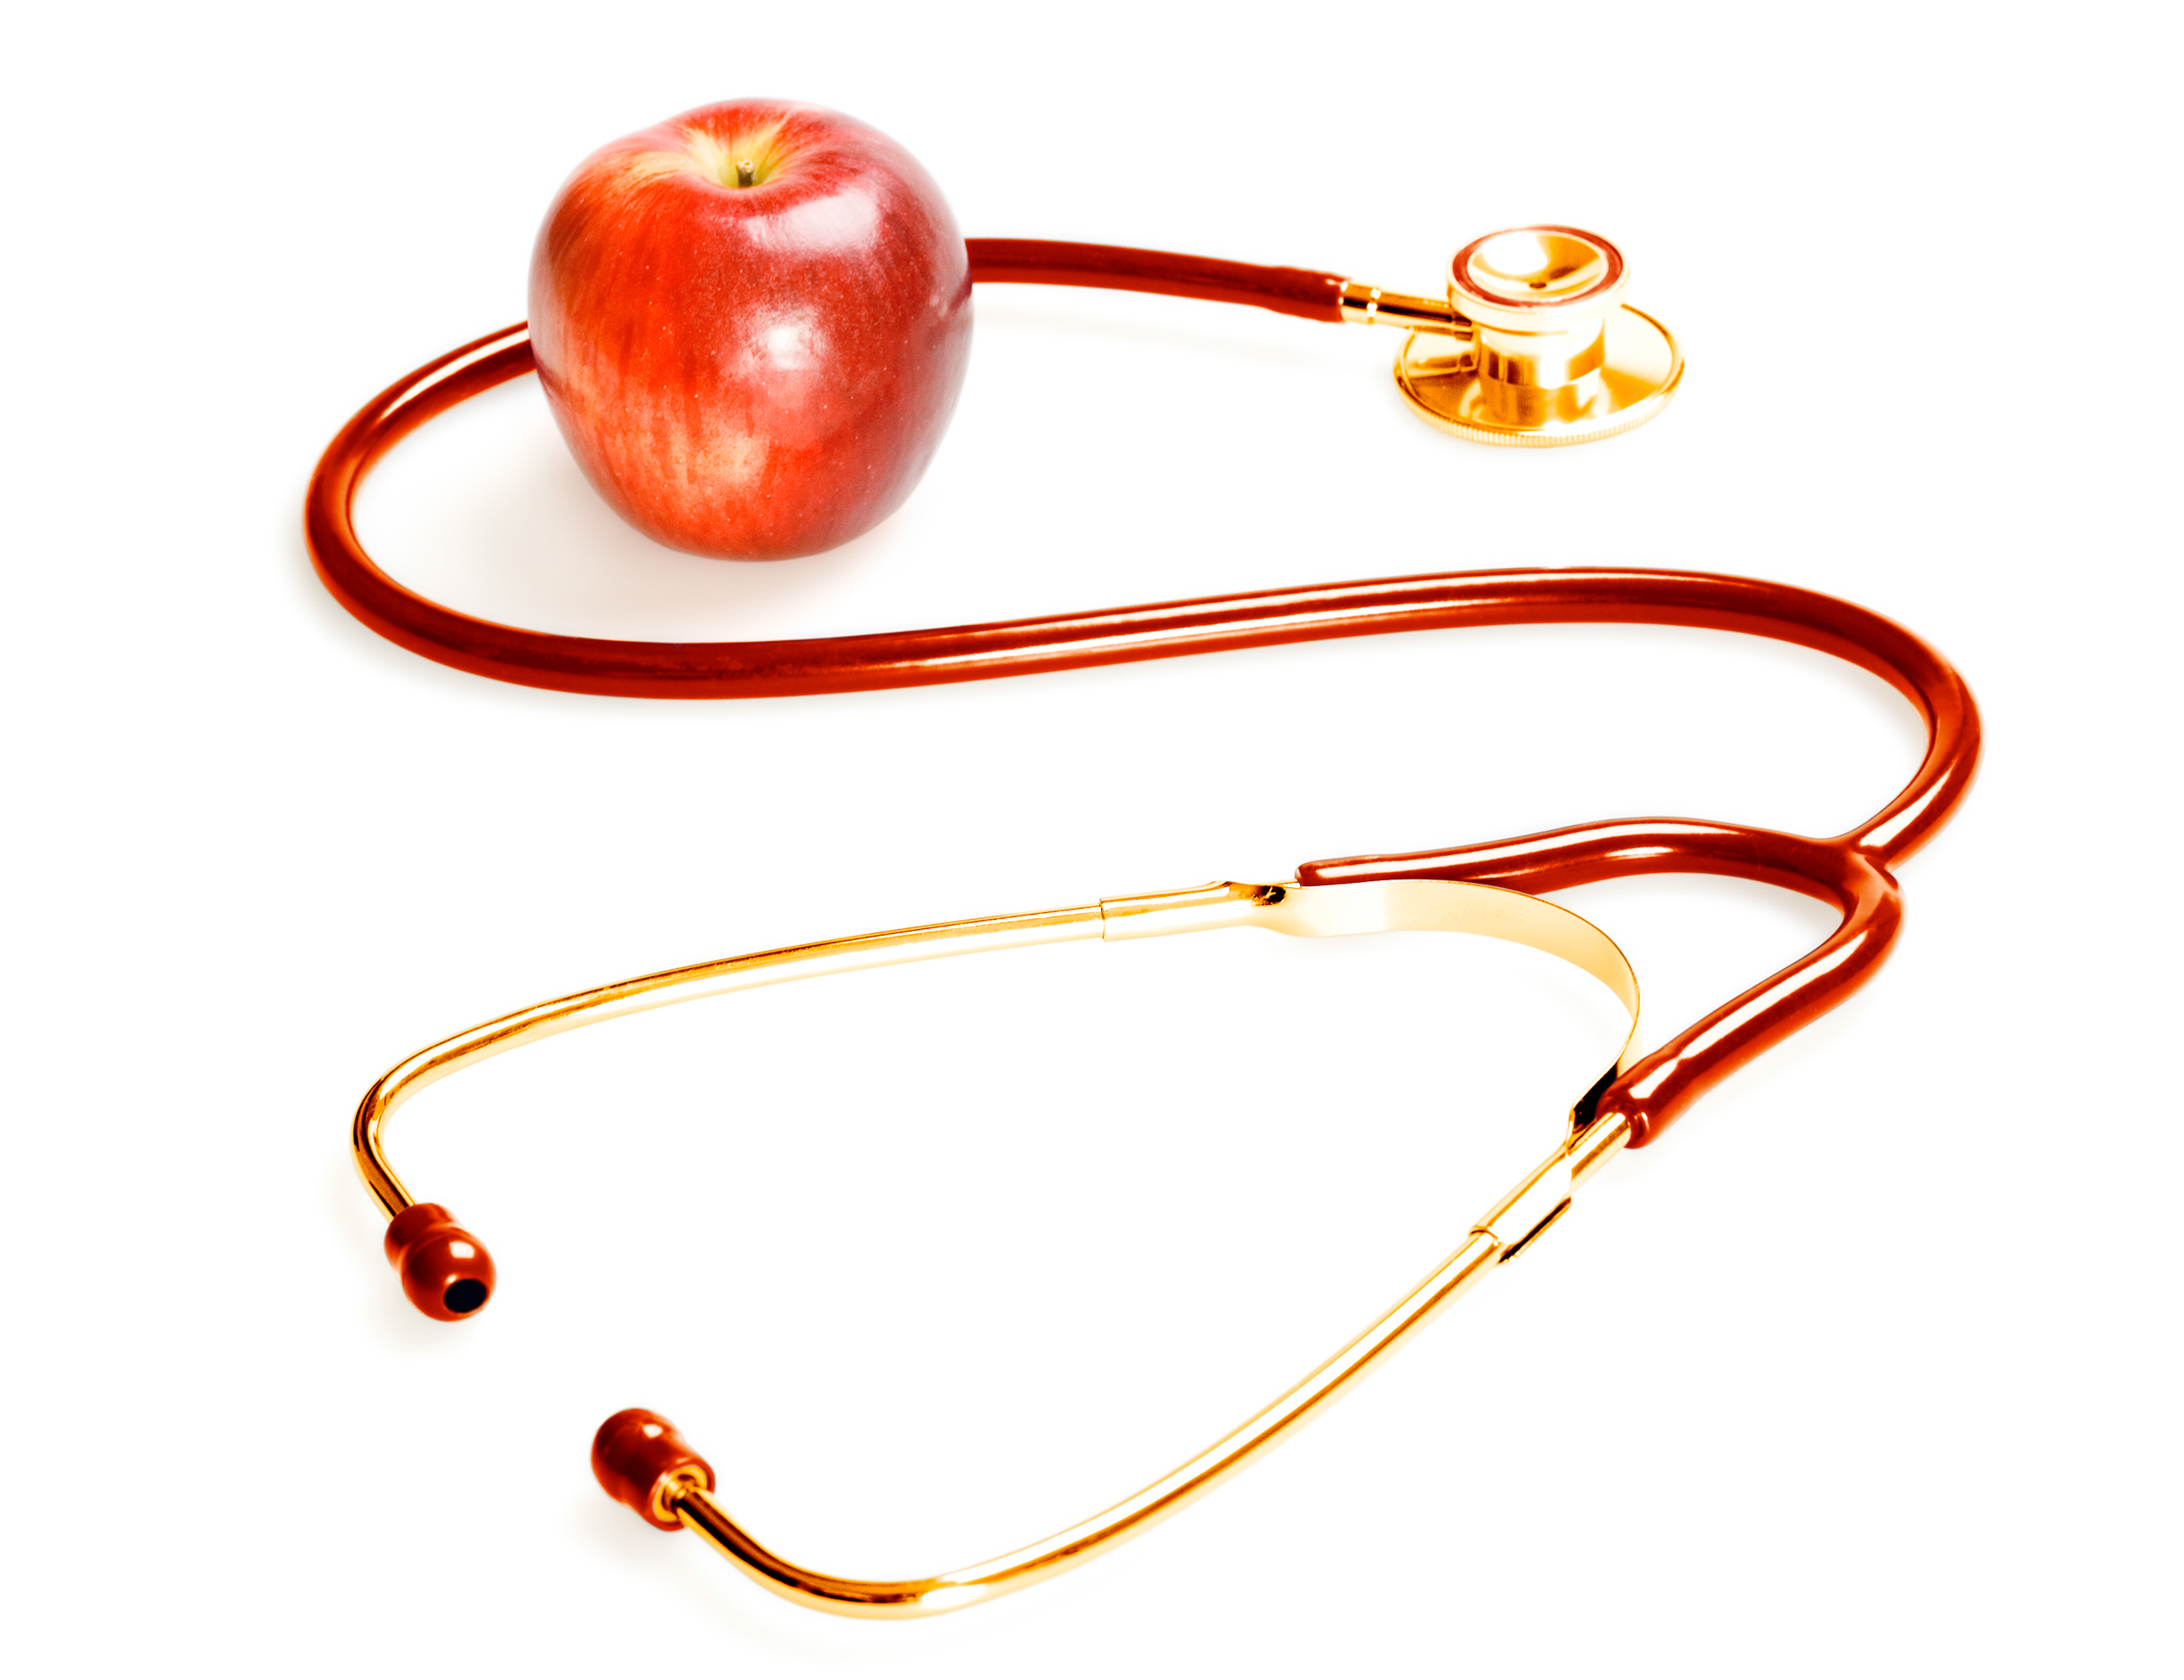 Яблоко в медицине. Яблоко с стетоскопом. Яблоко и фонендоскоп. Яблоки в медицине. Картинка яблоко и стетофонендоскопа.